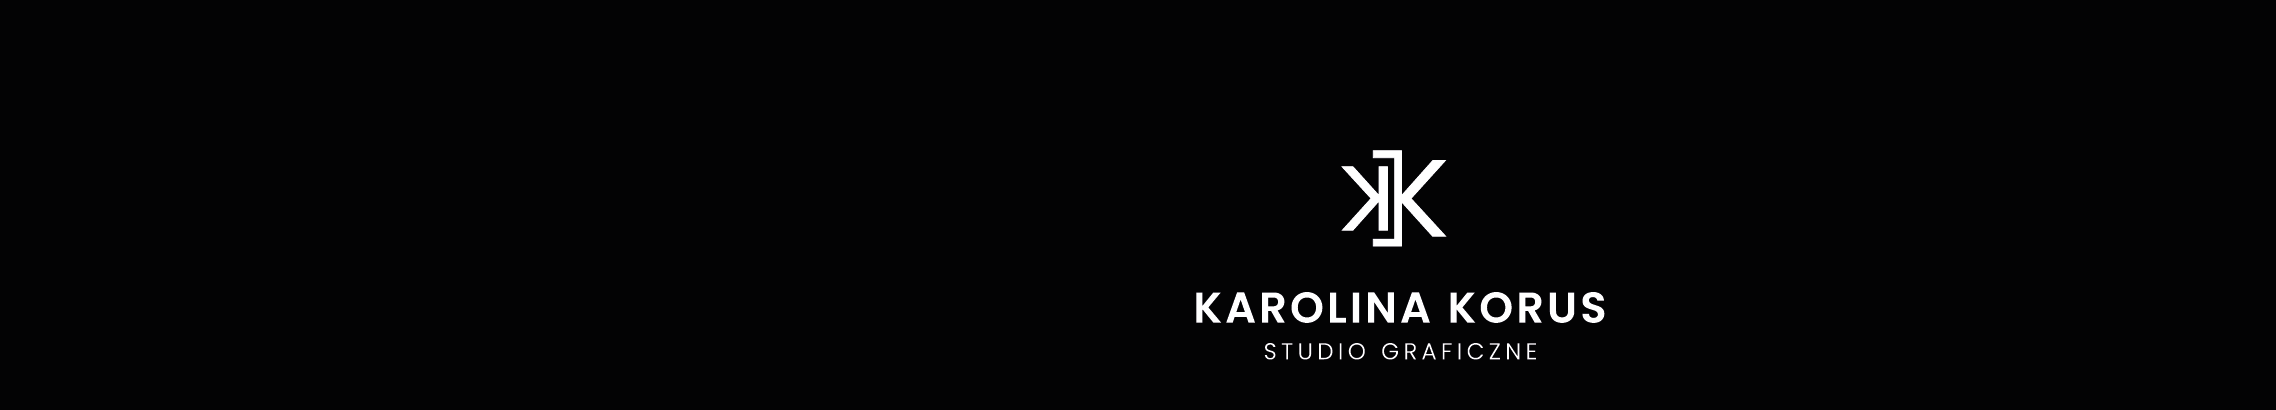 Bannière de profil de Karolina Korus